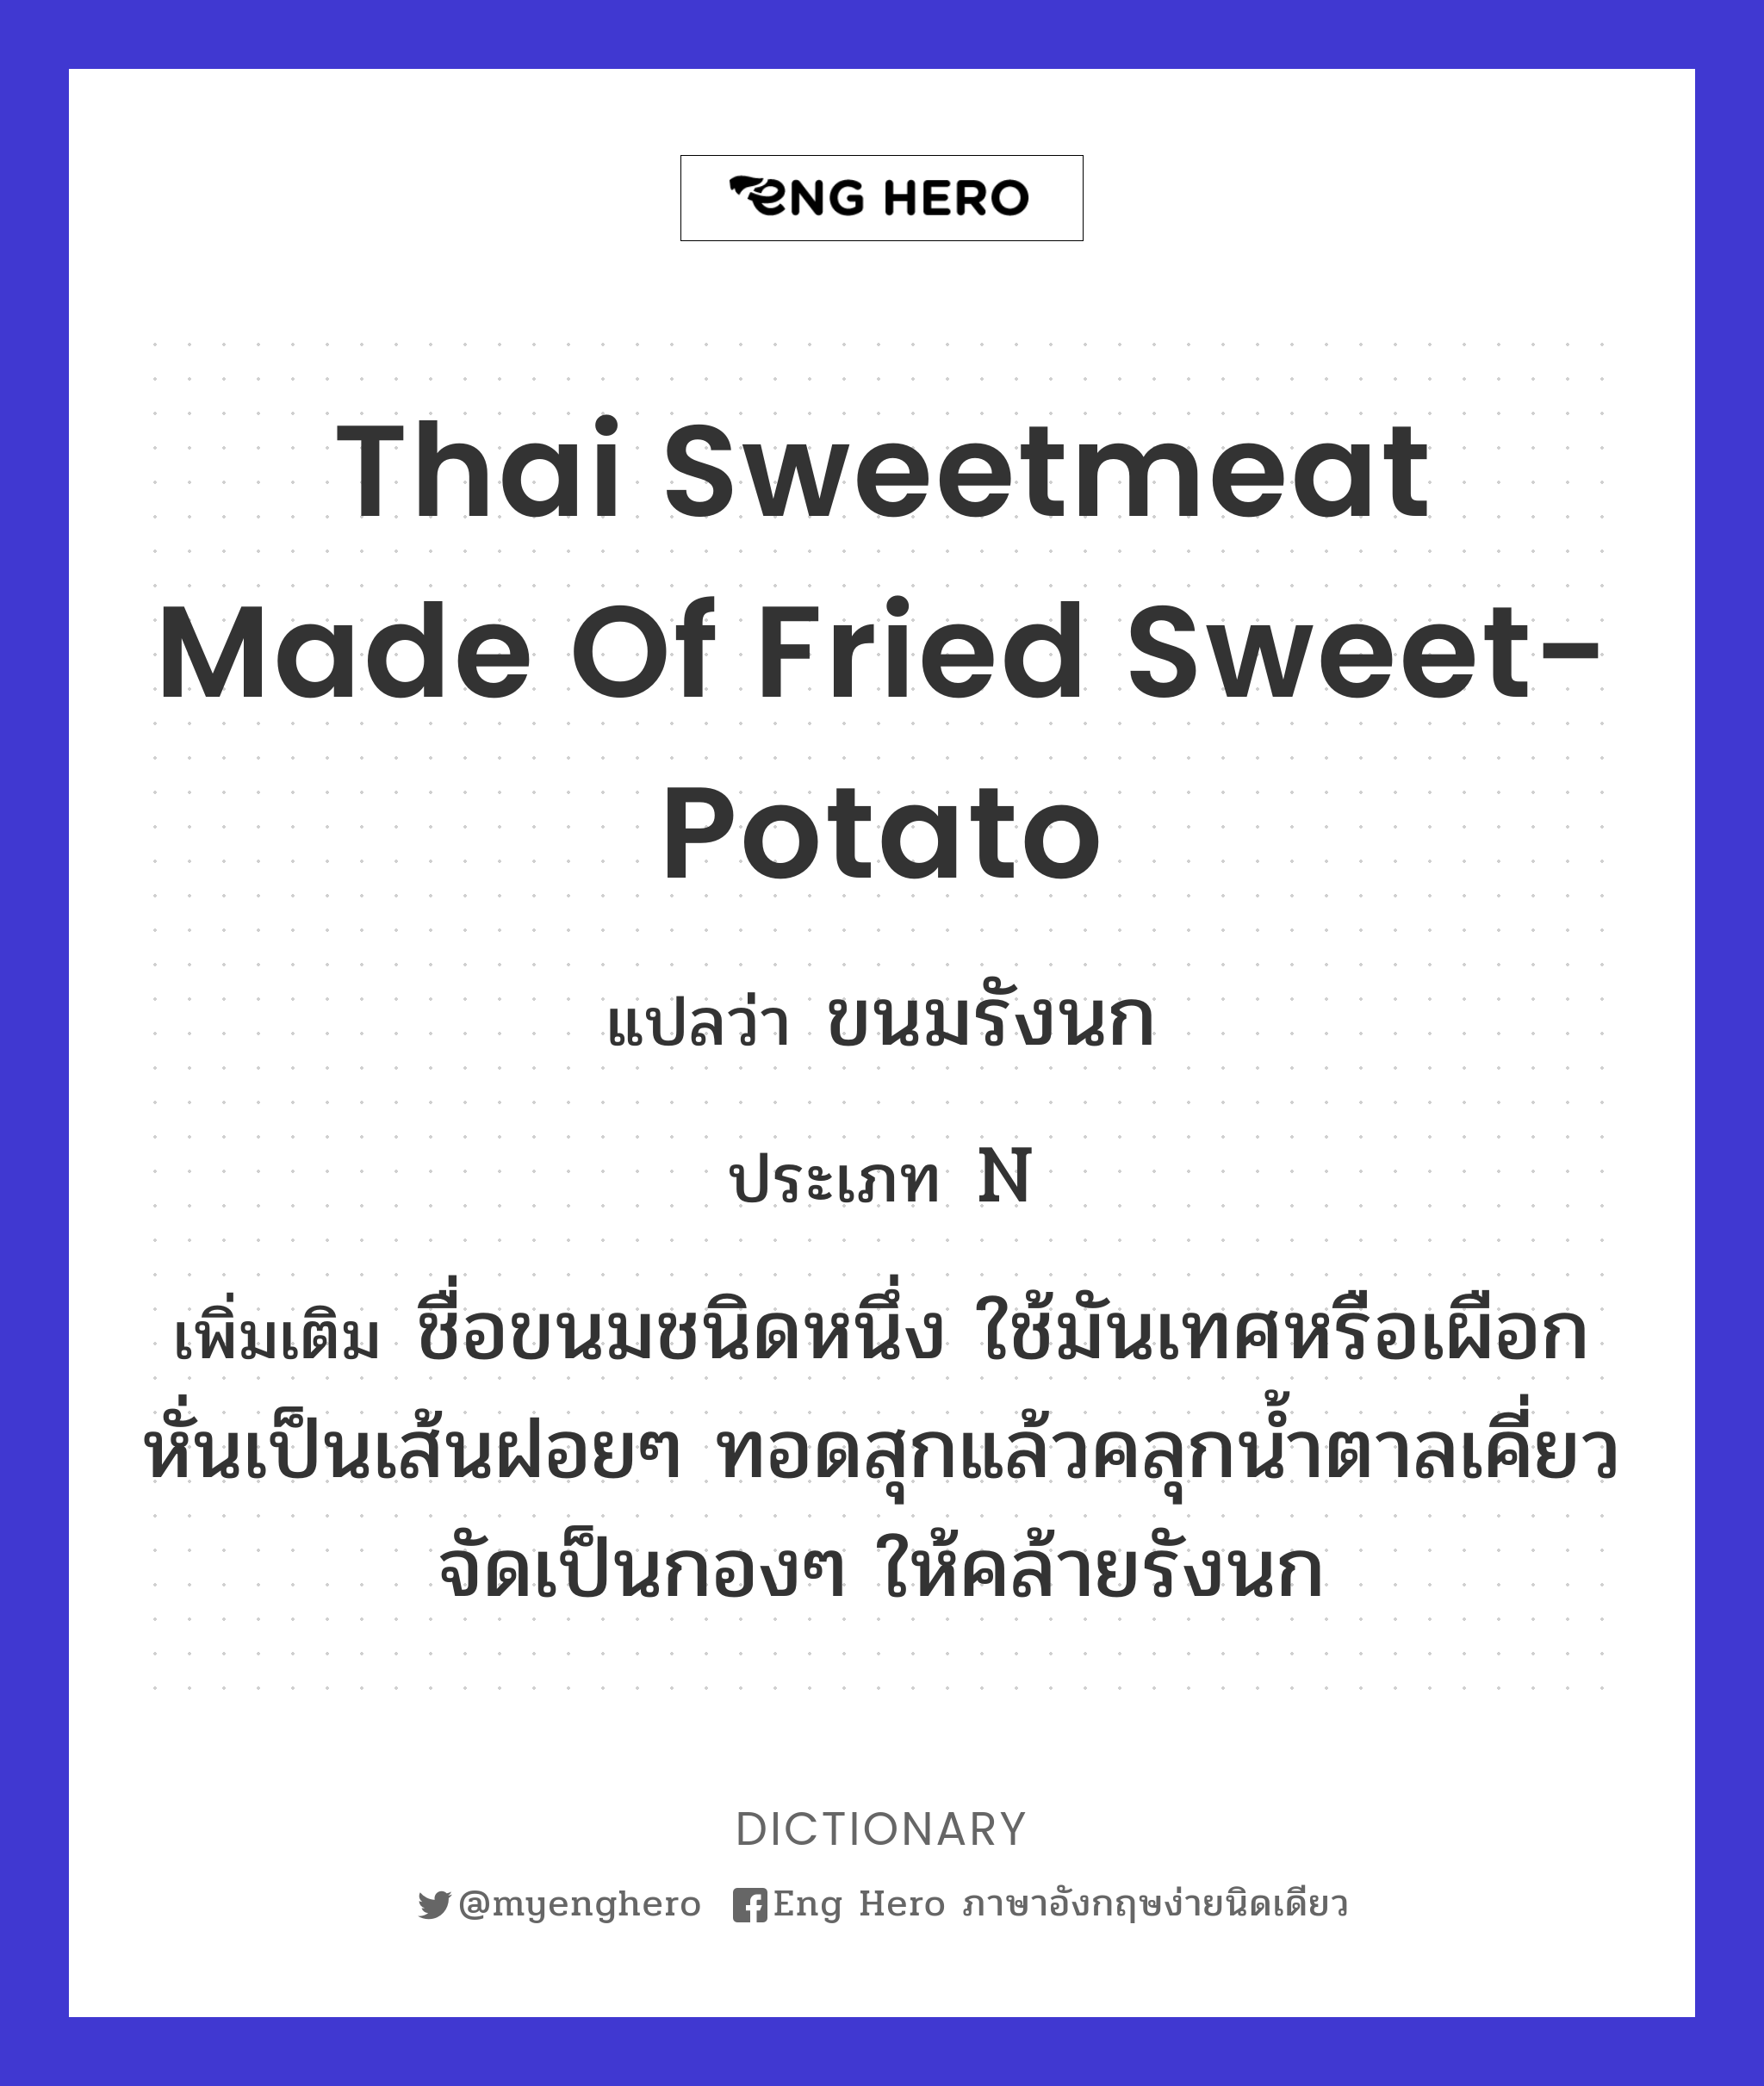 Thai sweetmeat made of fried sweet-potato